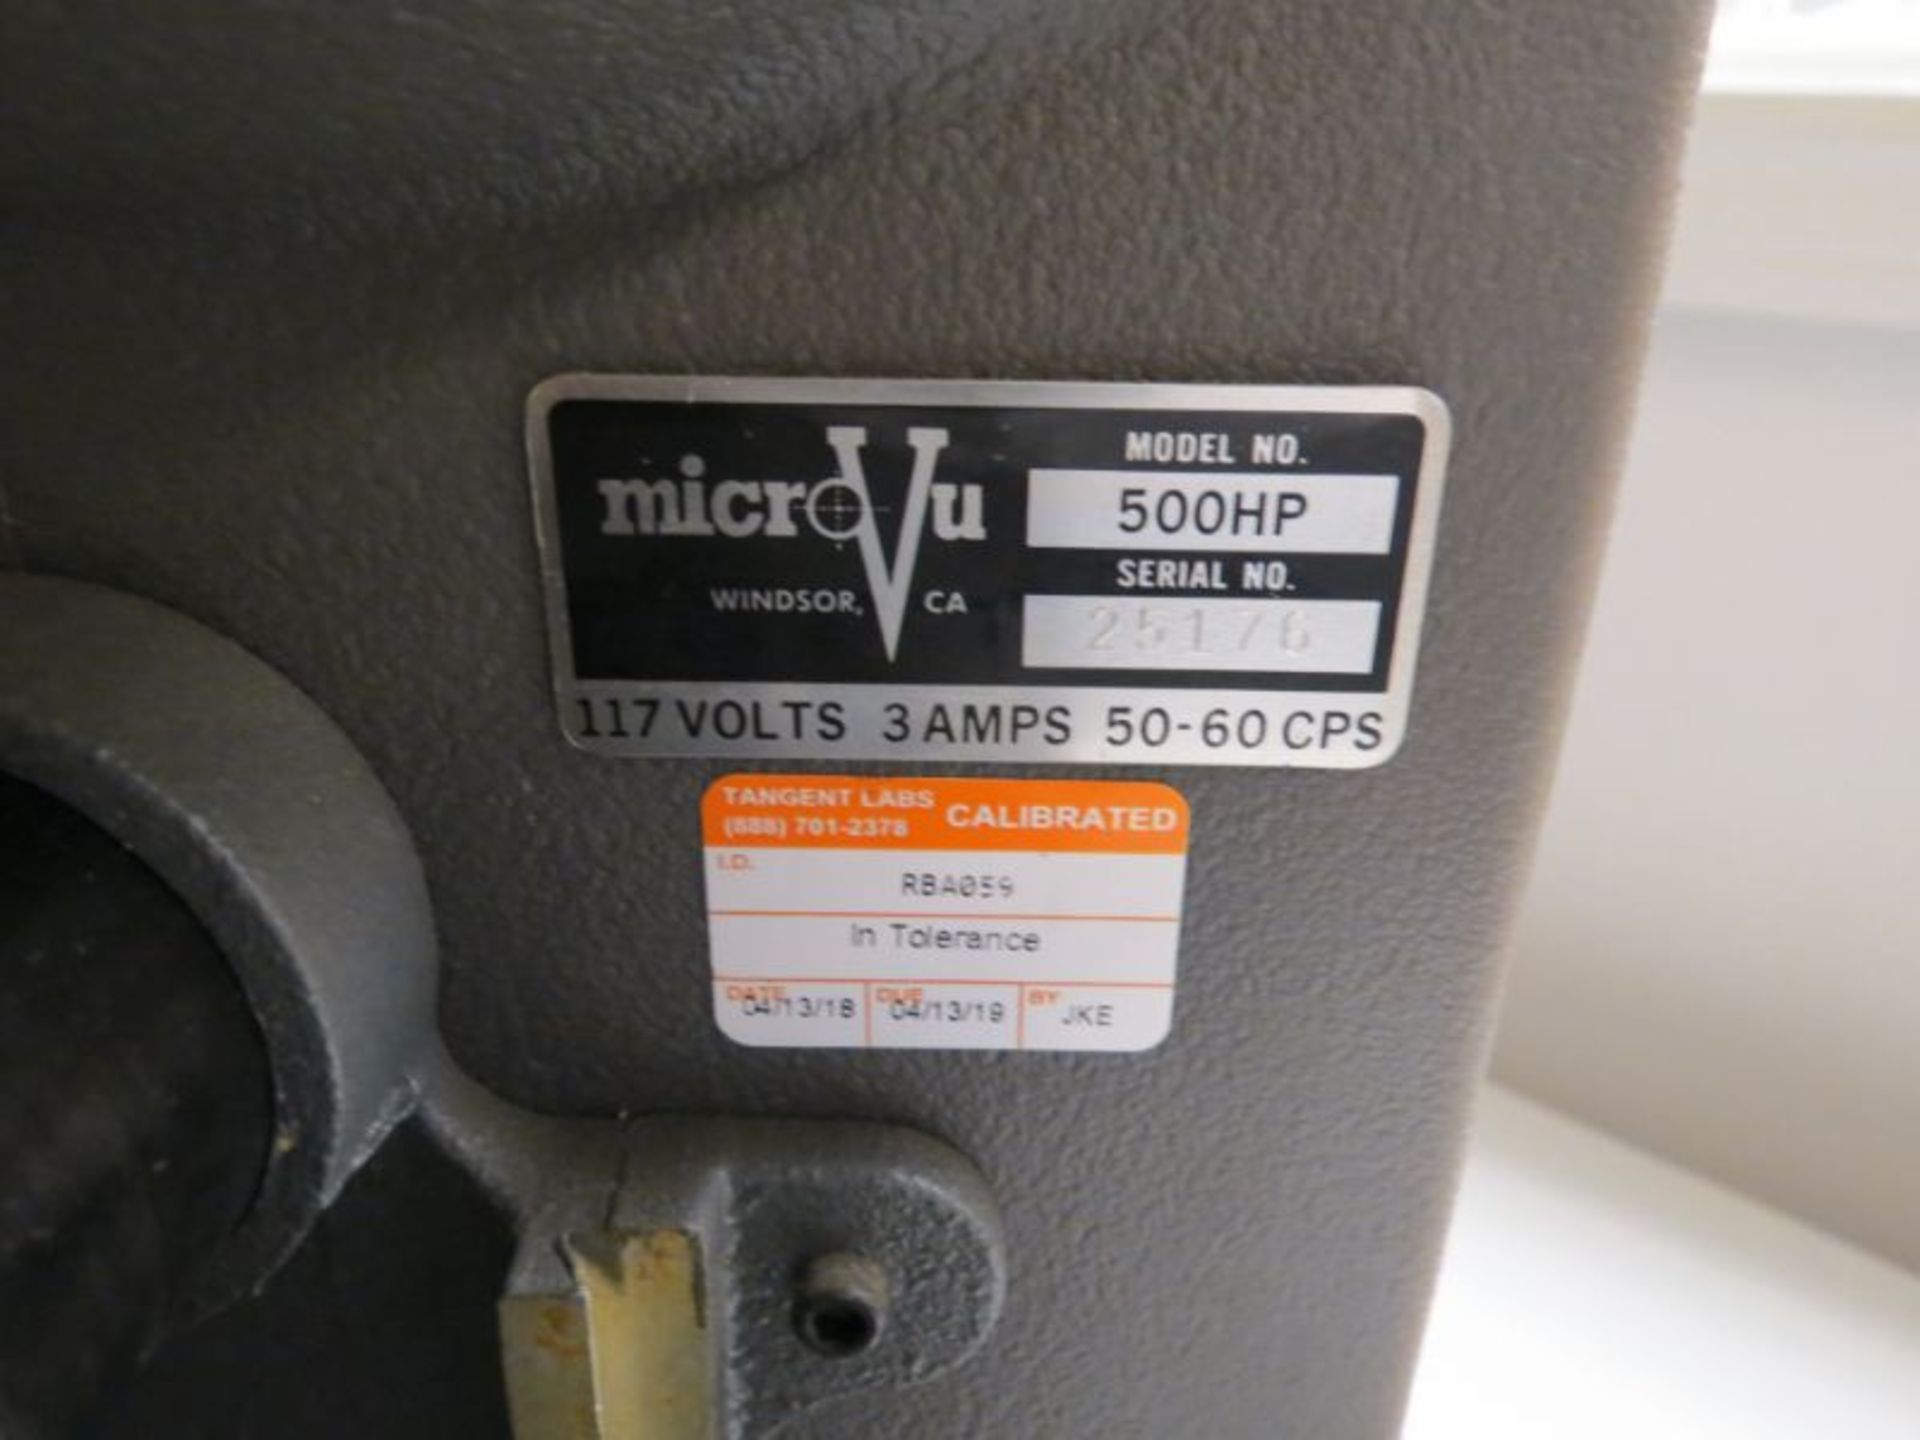 MicroVu 500HP Comparator, s/n 25176 - Image 5 of 5